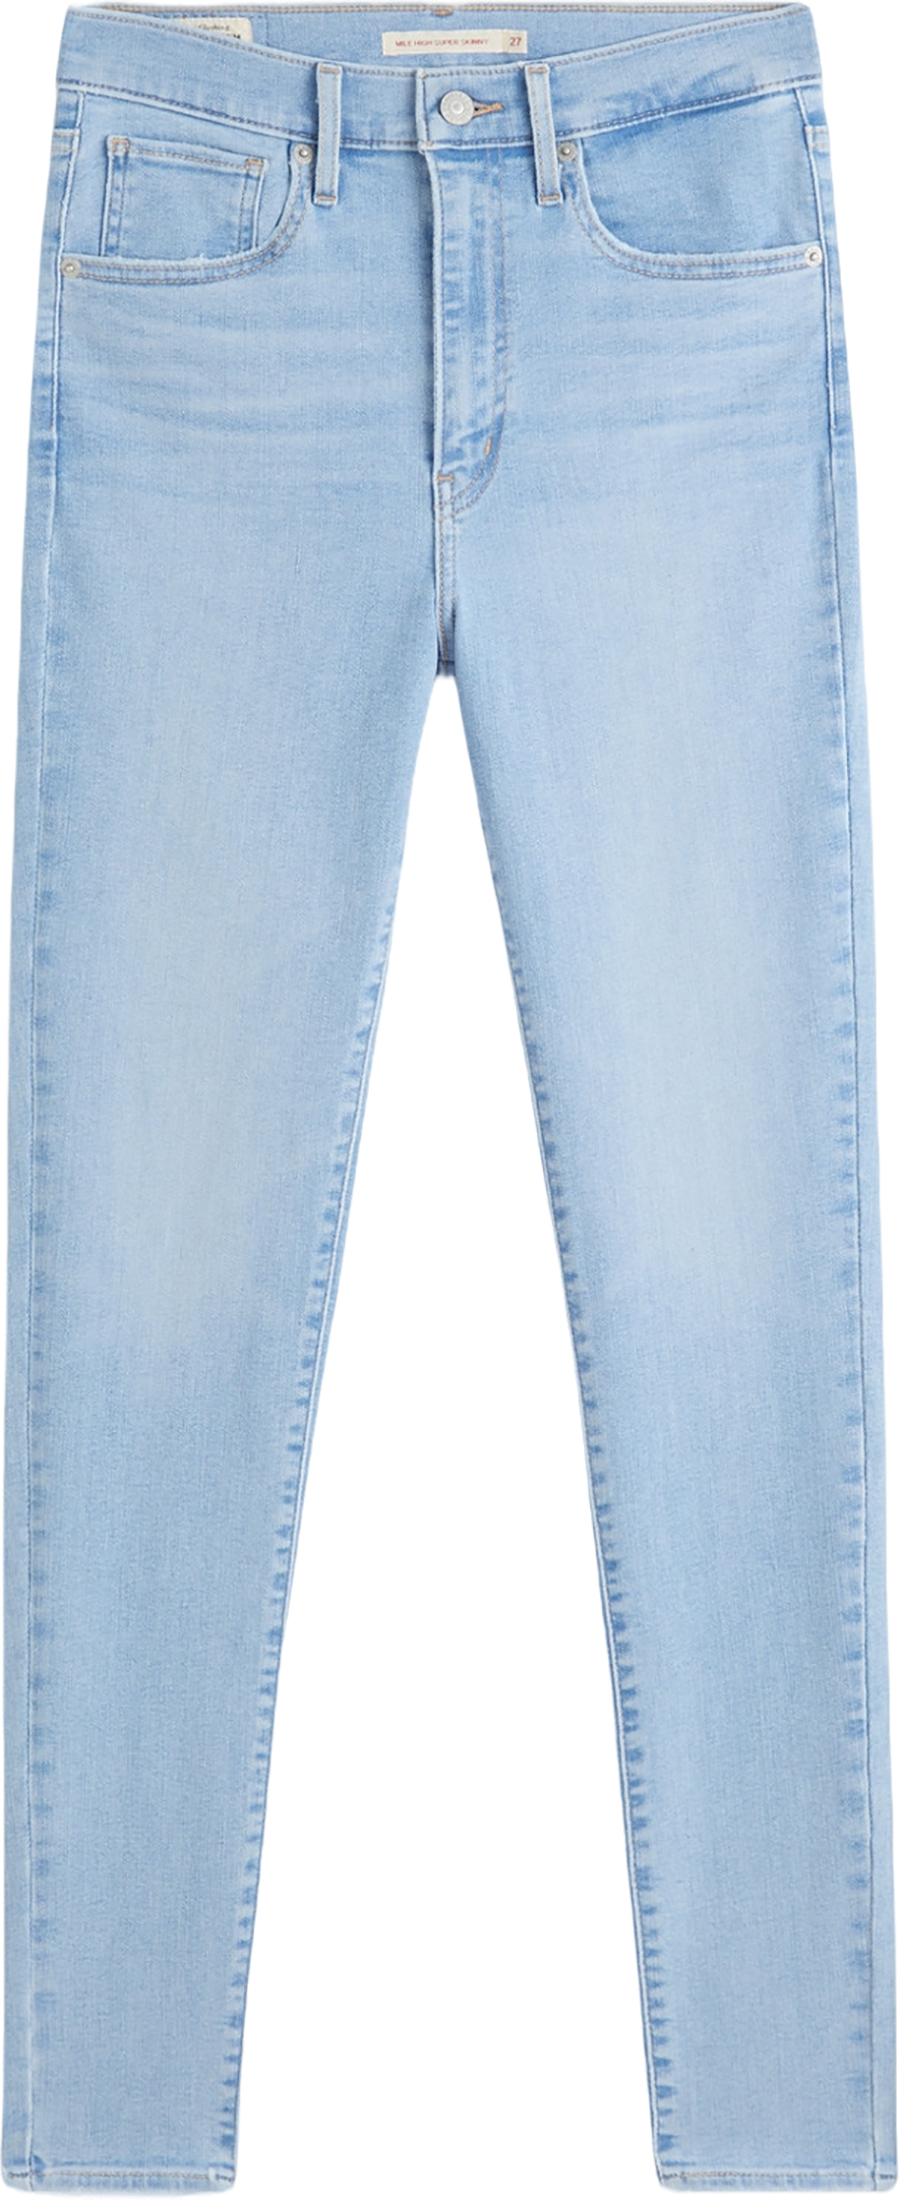 Джинсы Levis Women Mile High Super Skinny Jeans (22791-0060